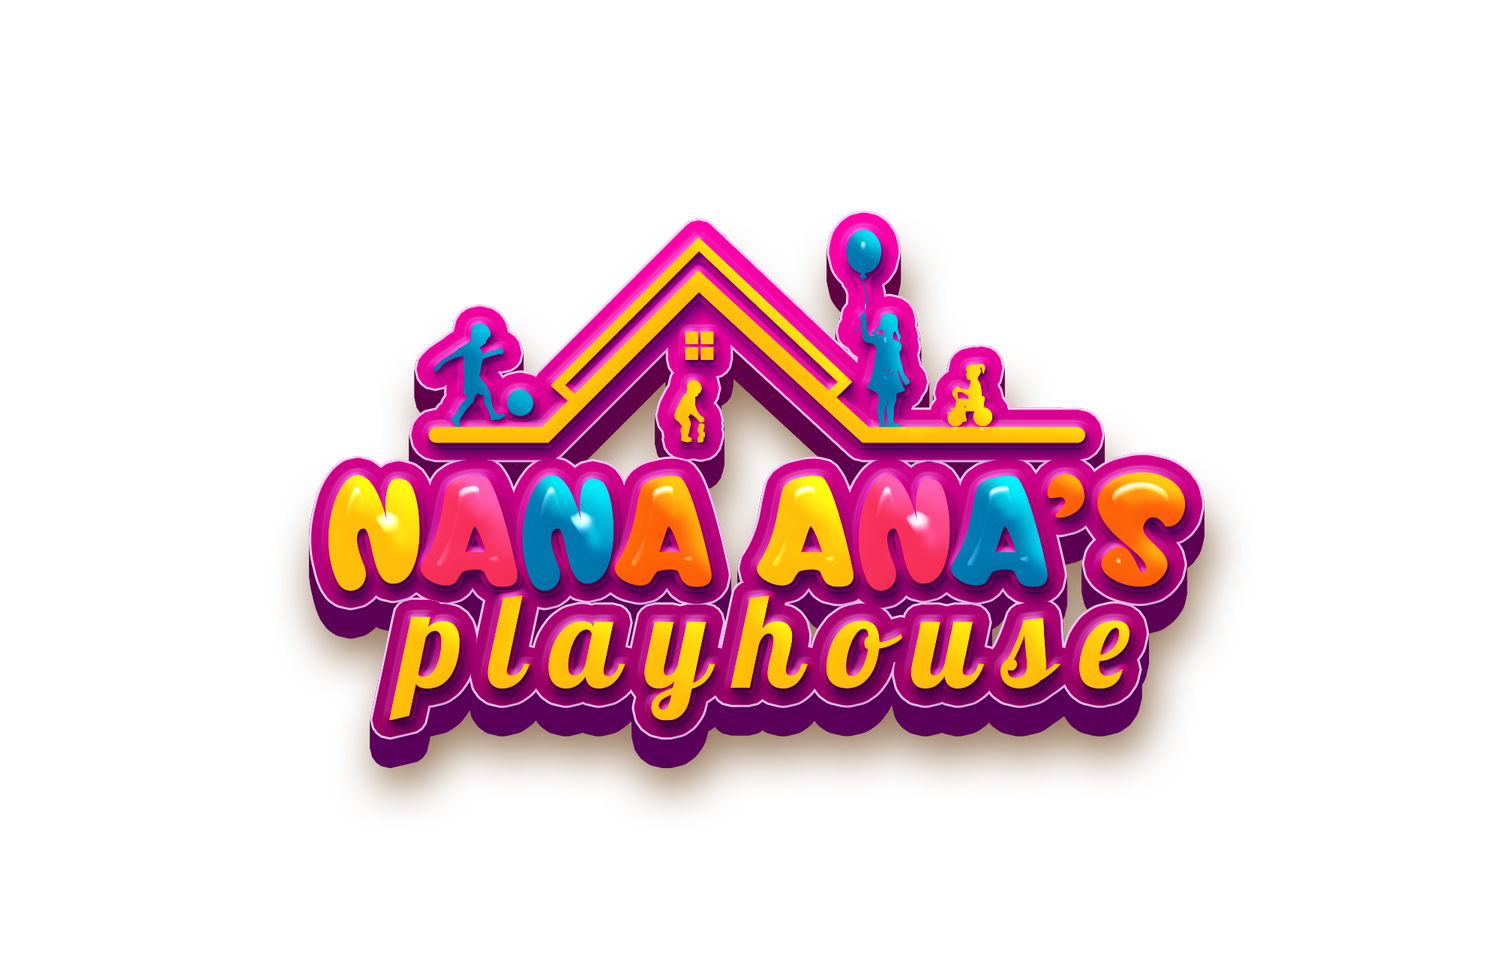 Nana Ana’s Playhouse